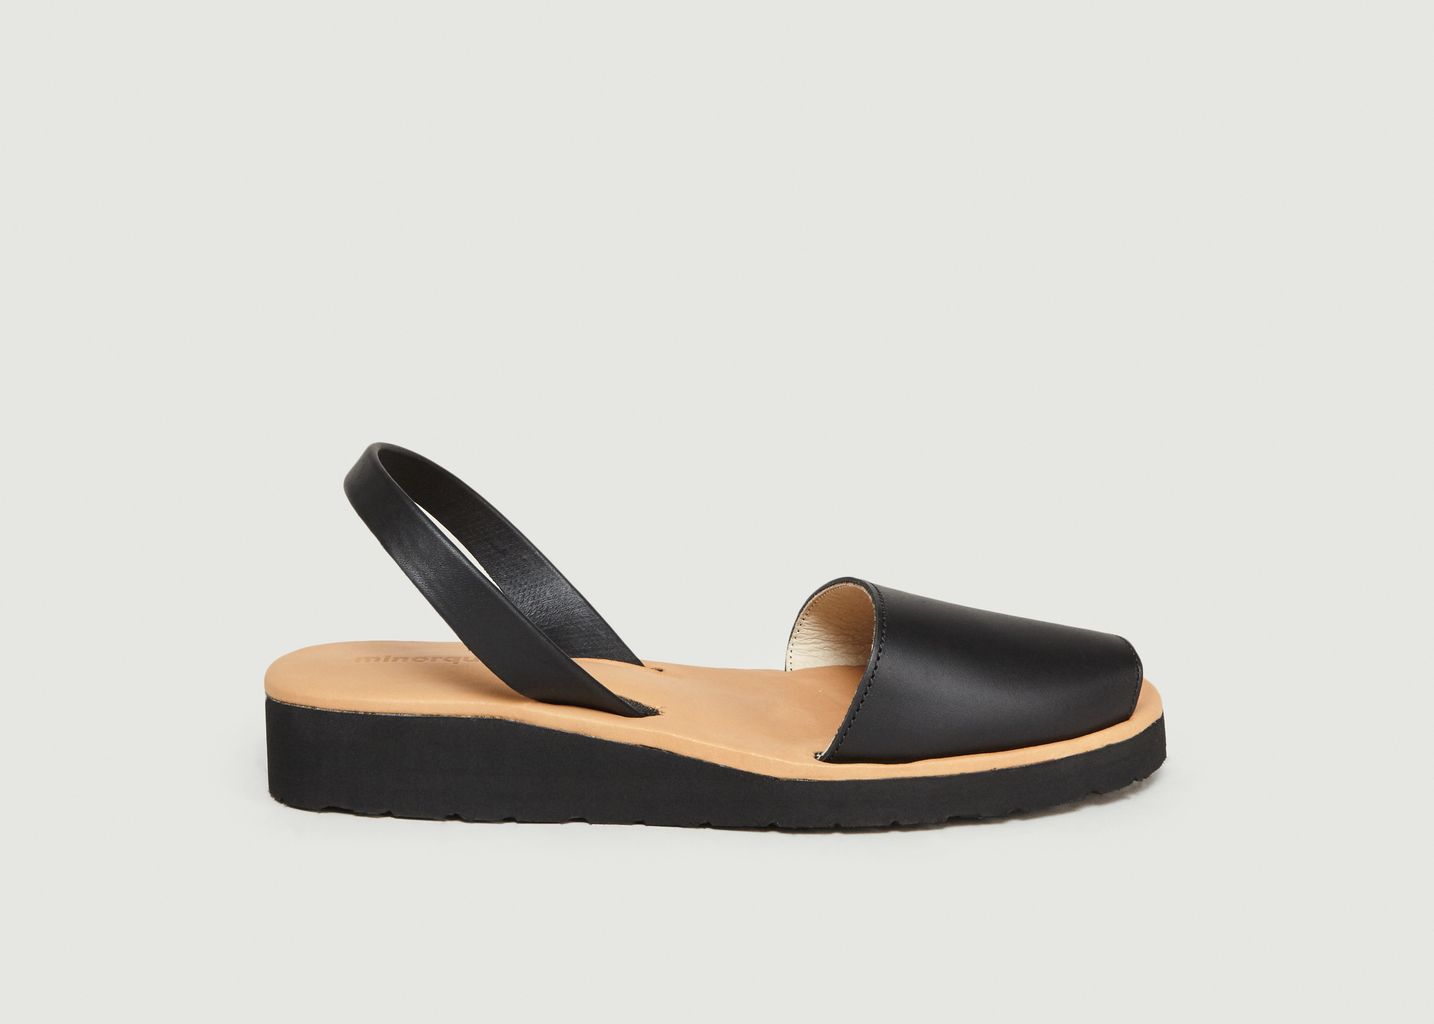 Avarca Platja Black Leather Sandals - Minorquines